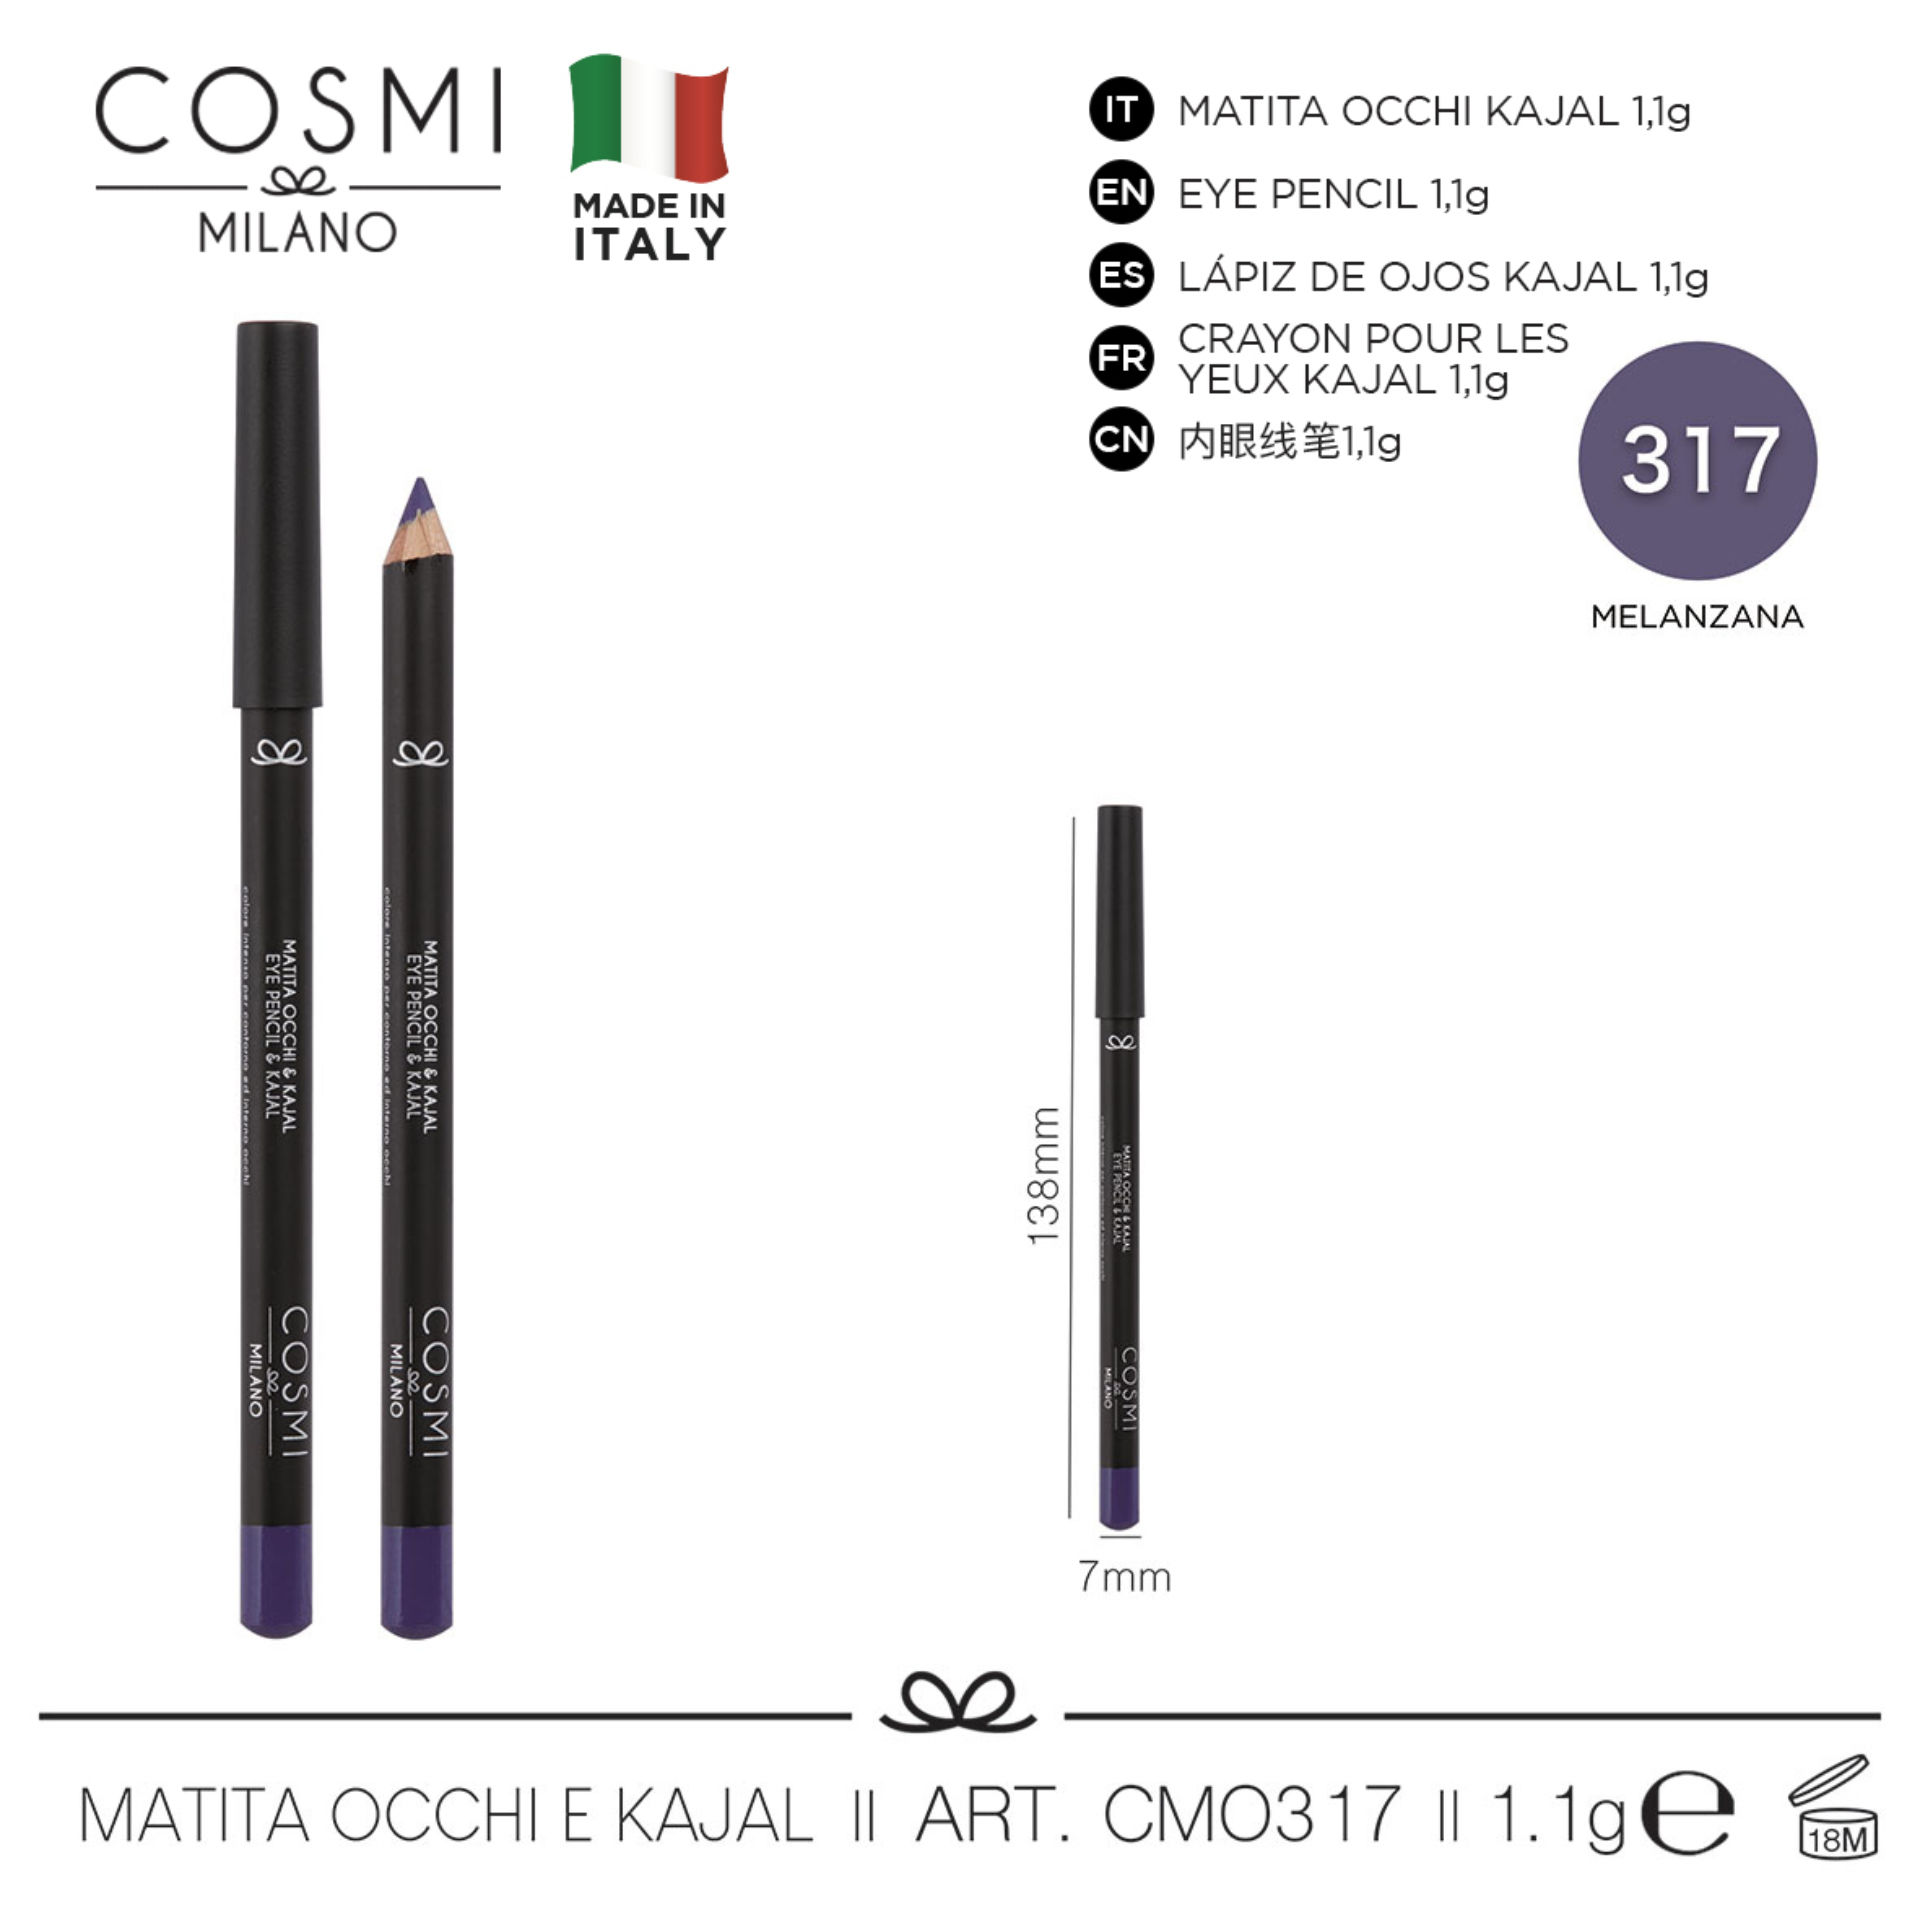 COSMI MATITA OCCHI AND KAJAL N.317Cosmi